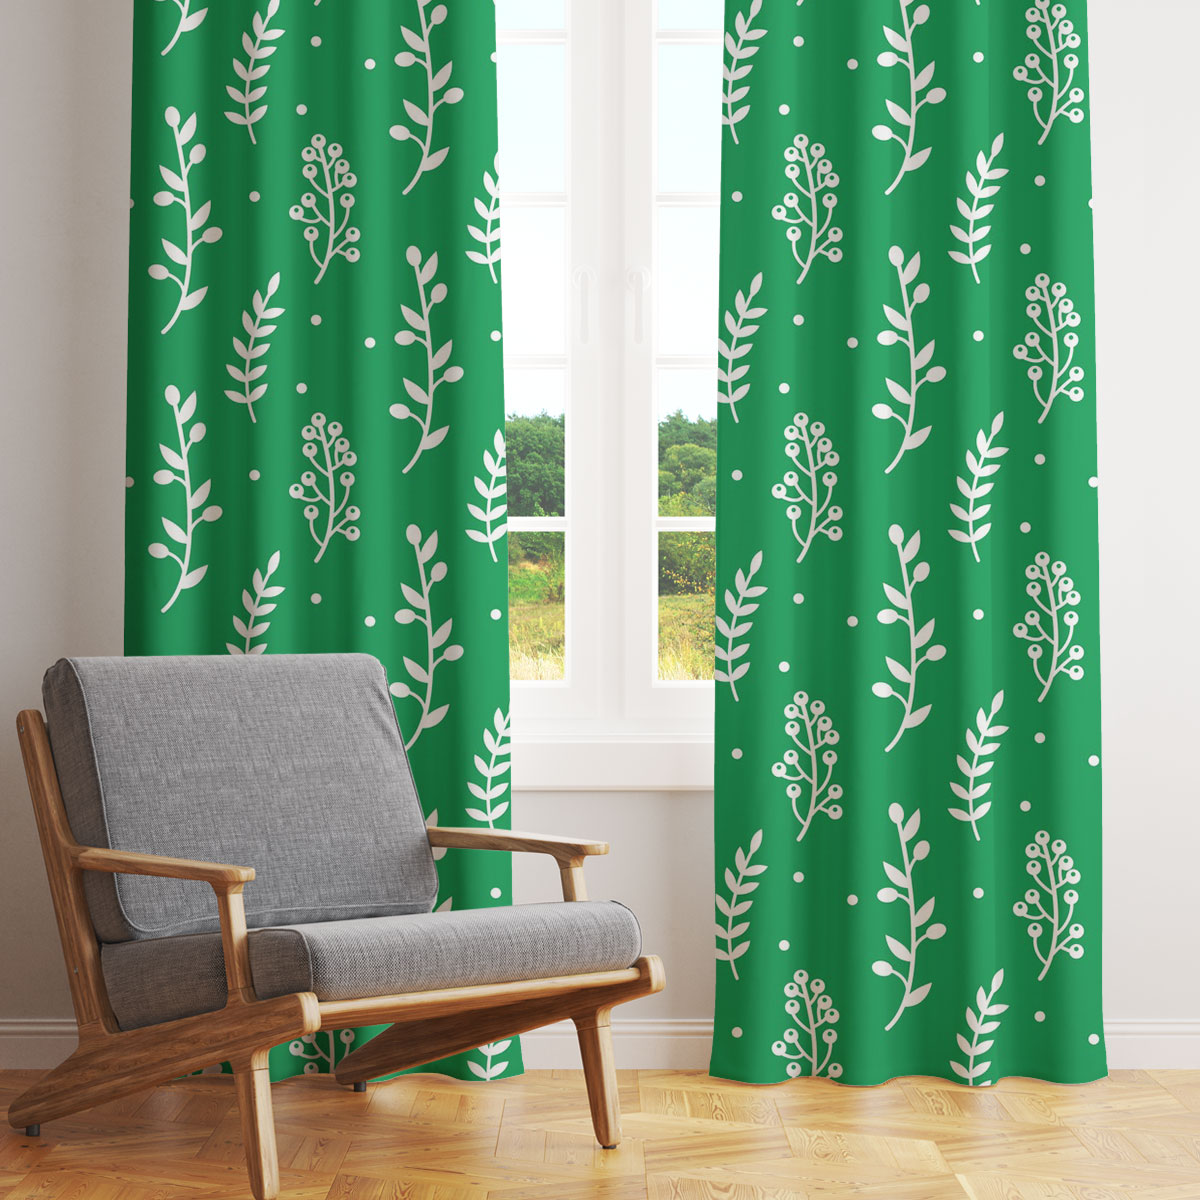 Christmas Mistletoe And Leaf, Mistletoe Clipart On Green Window Curtain